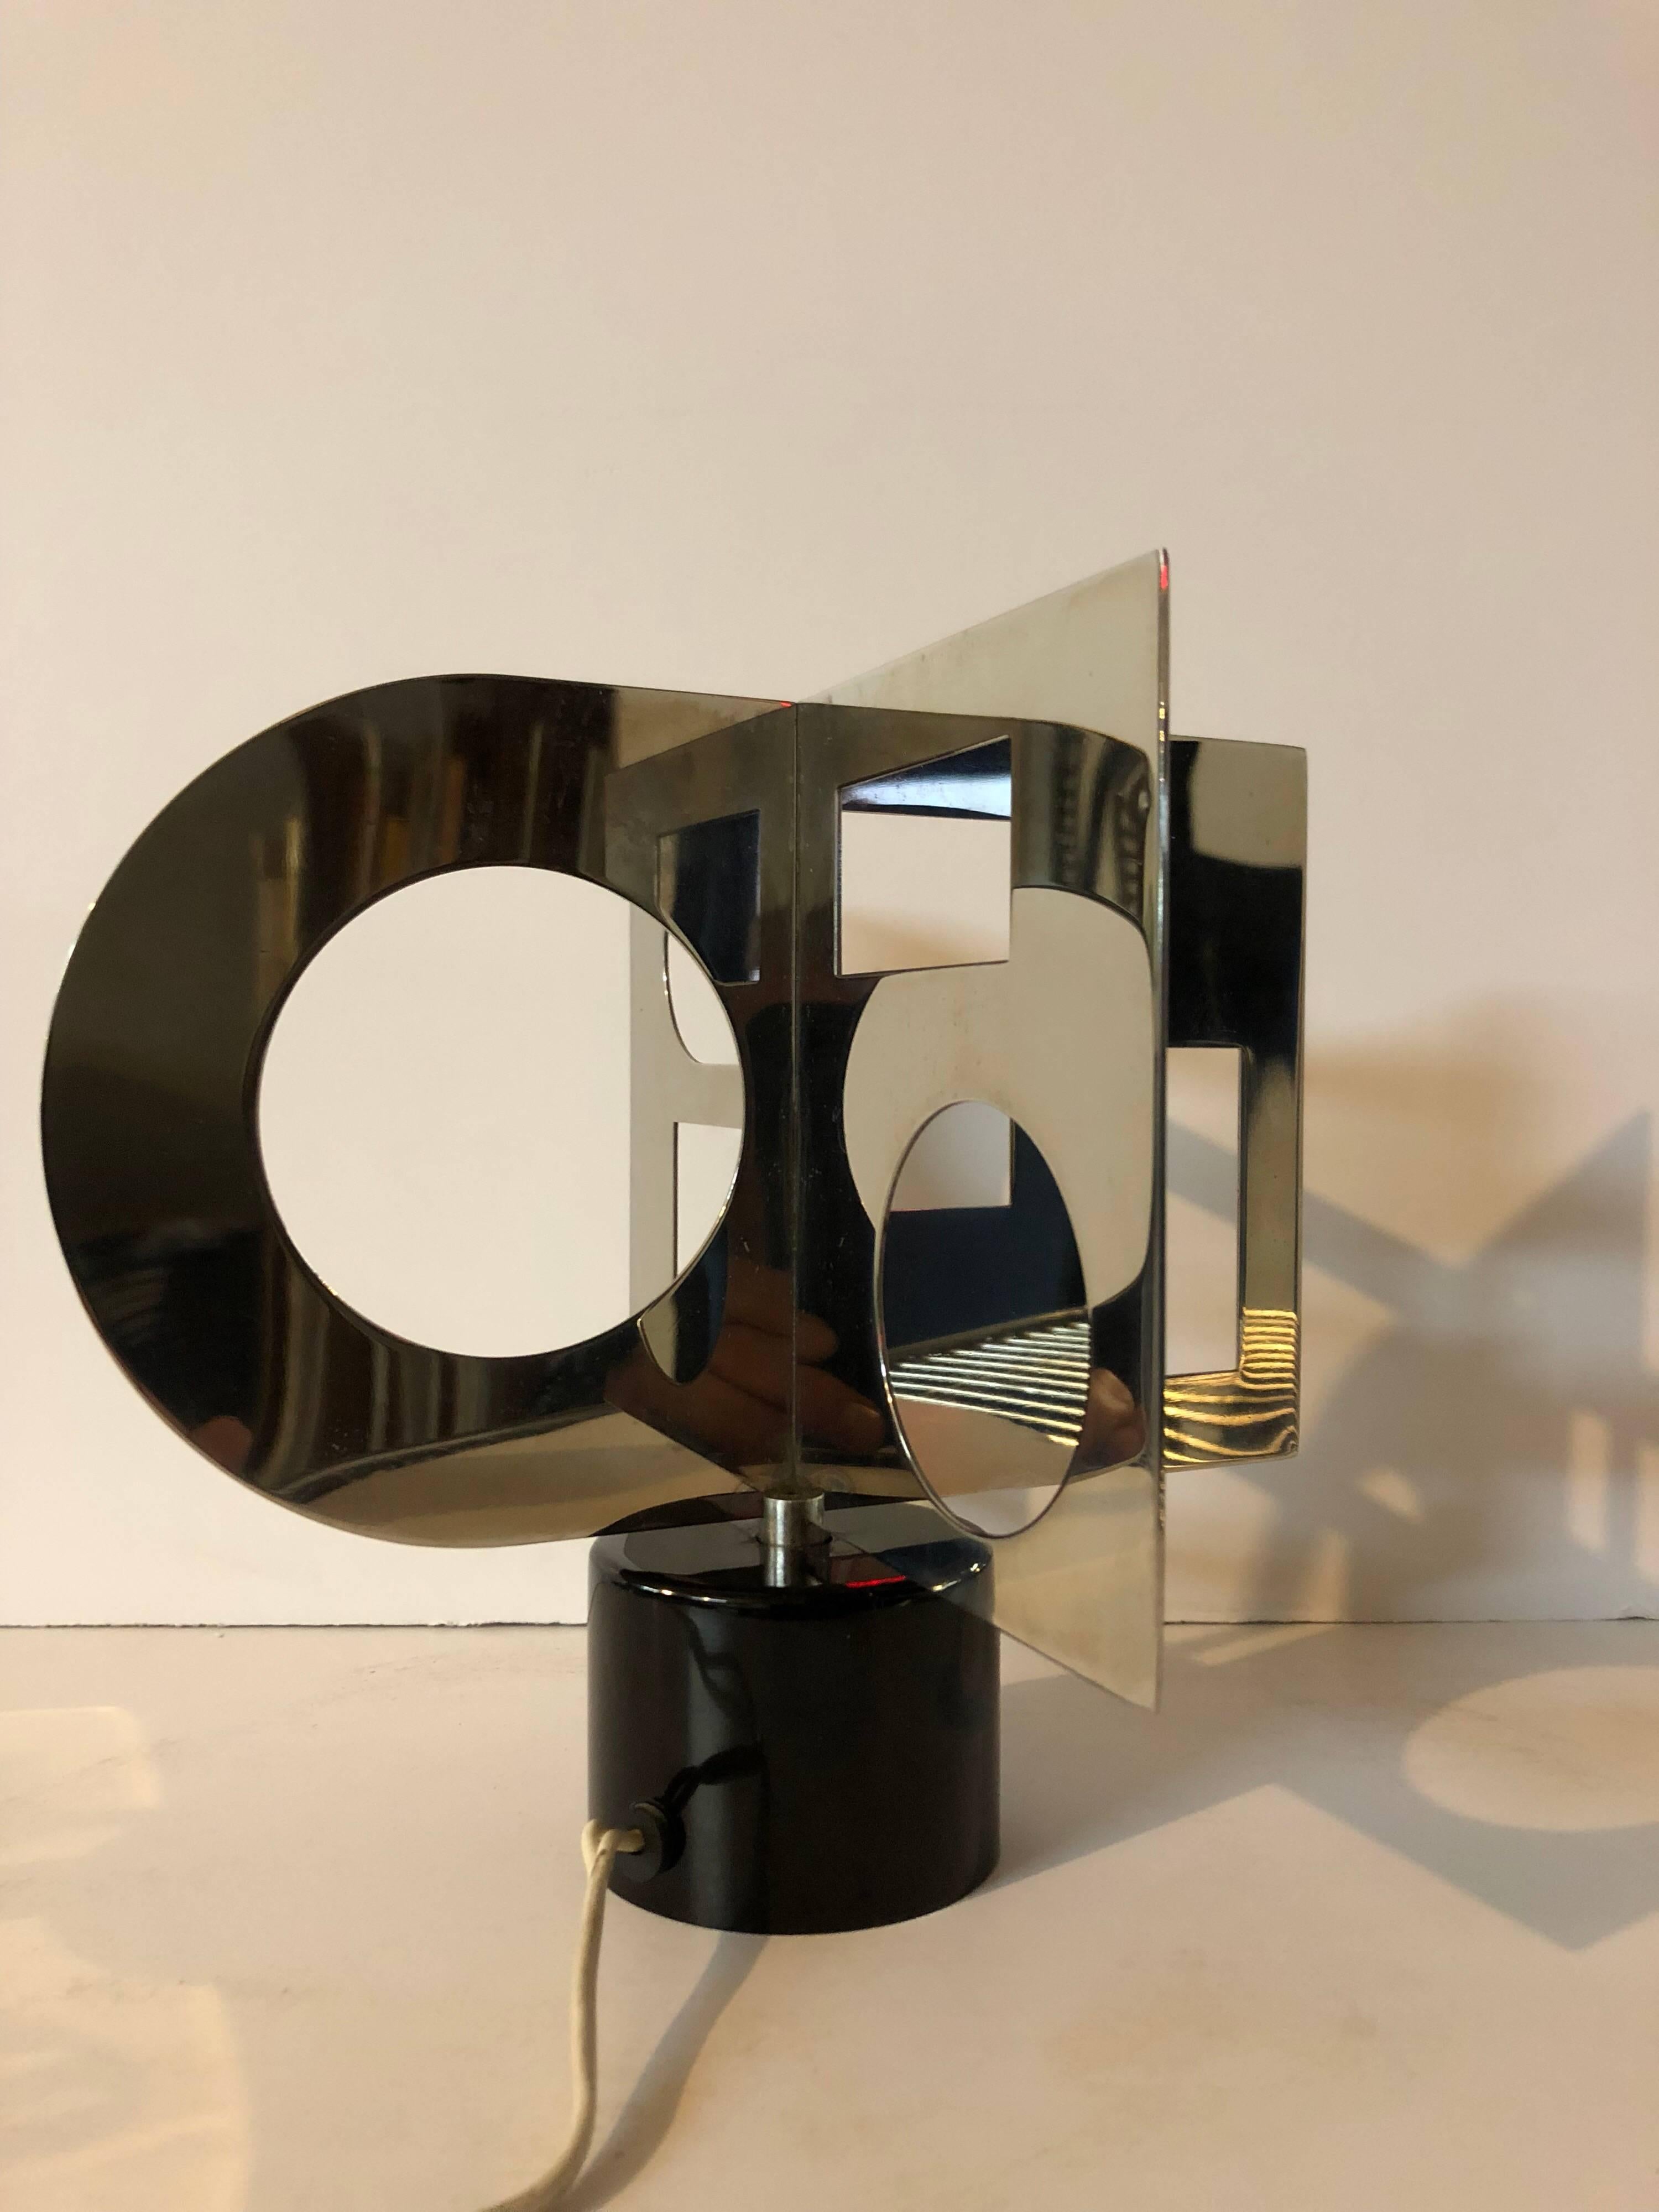 Nicolas Schöffer Abstract Sculpture – Motorisierte kinetische Skulptur „Miniskulptur“ Op Art Denise Rene Galerie Paris